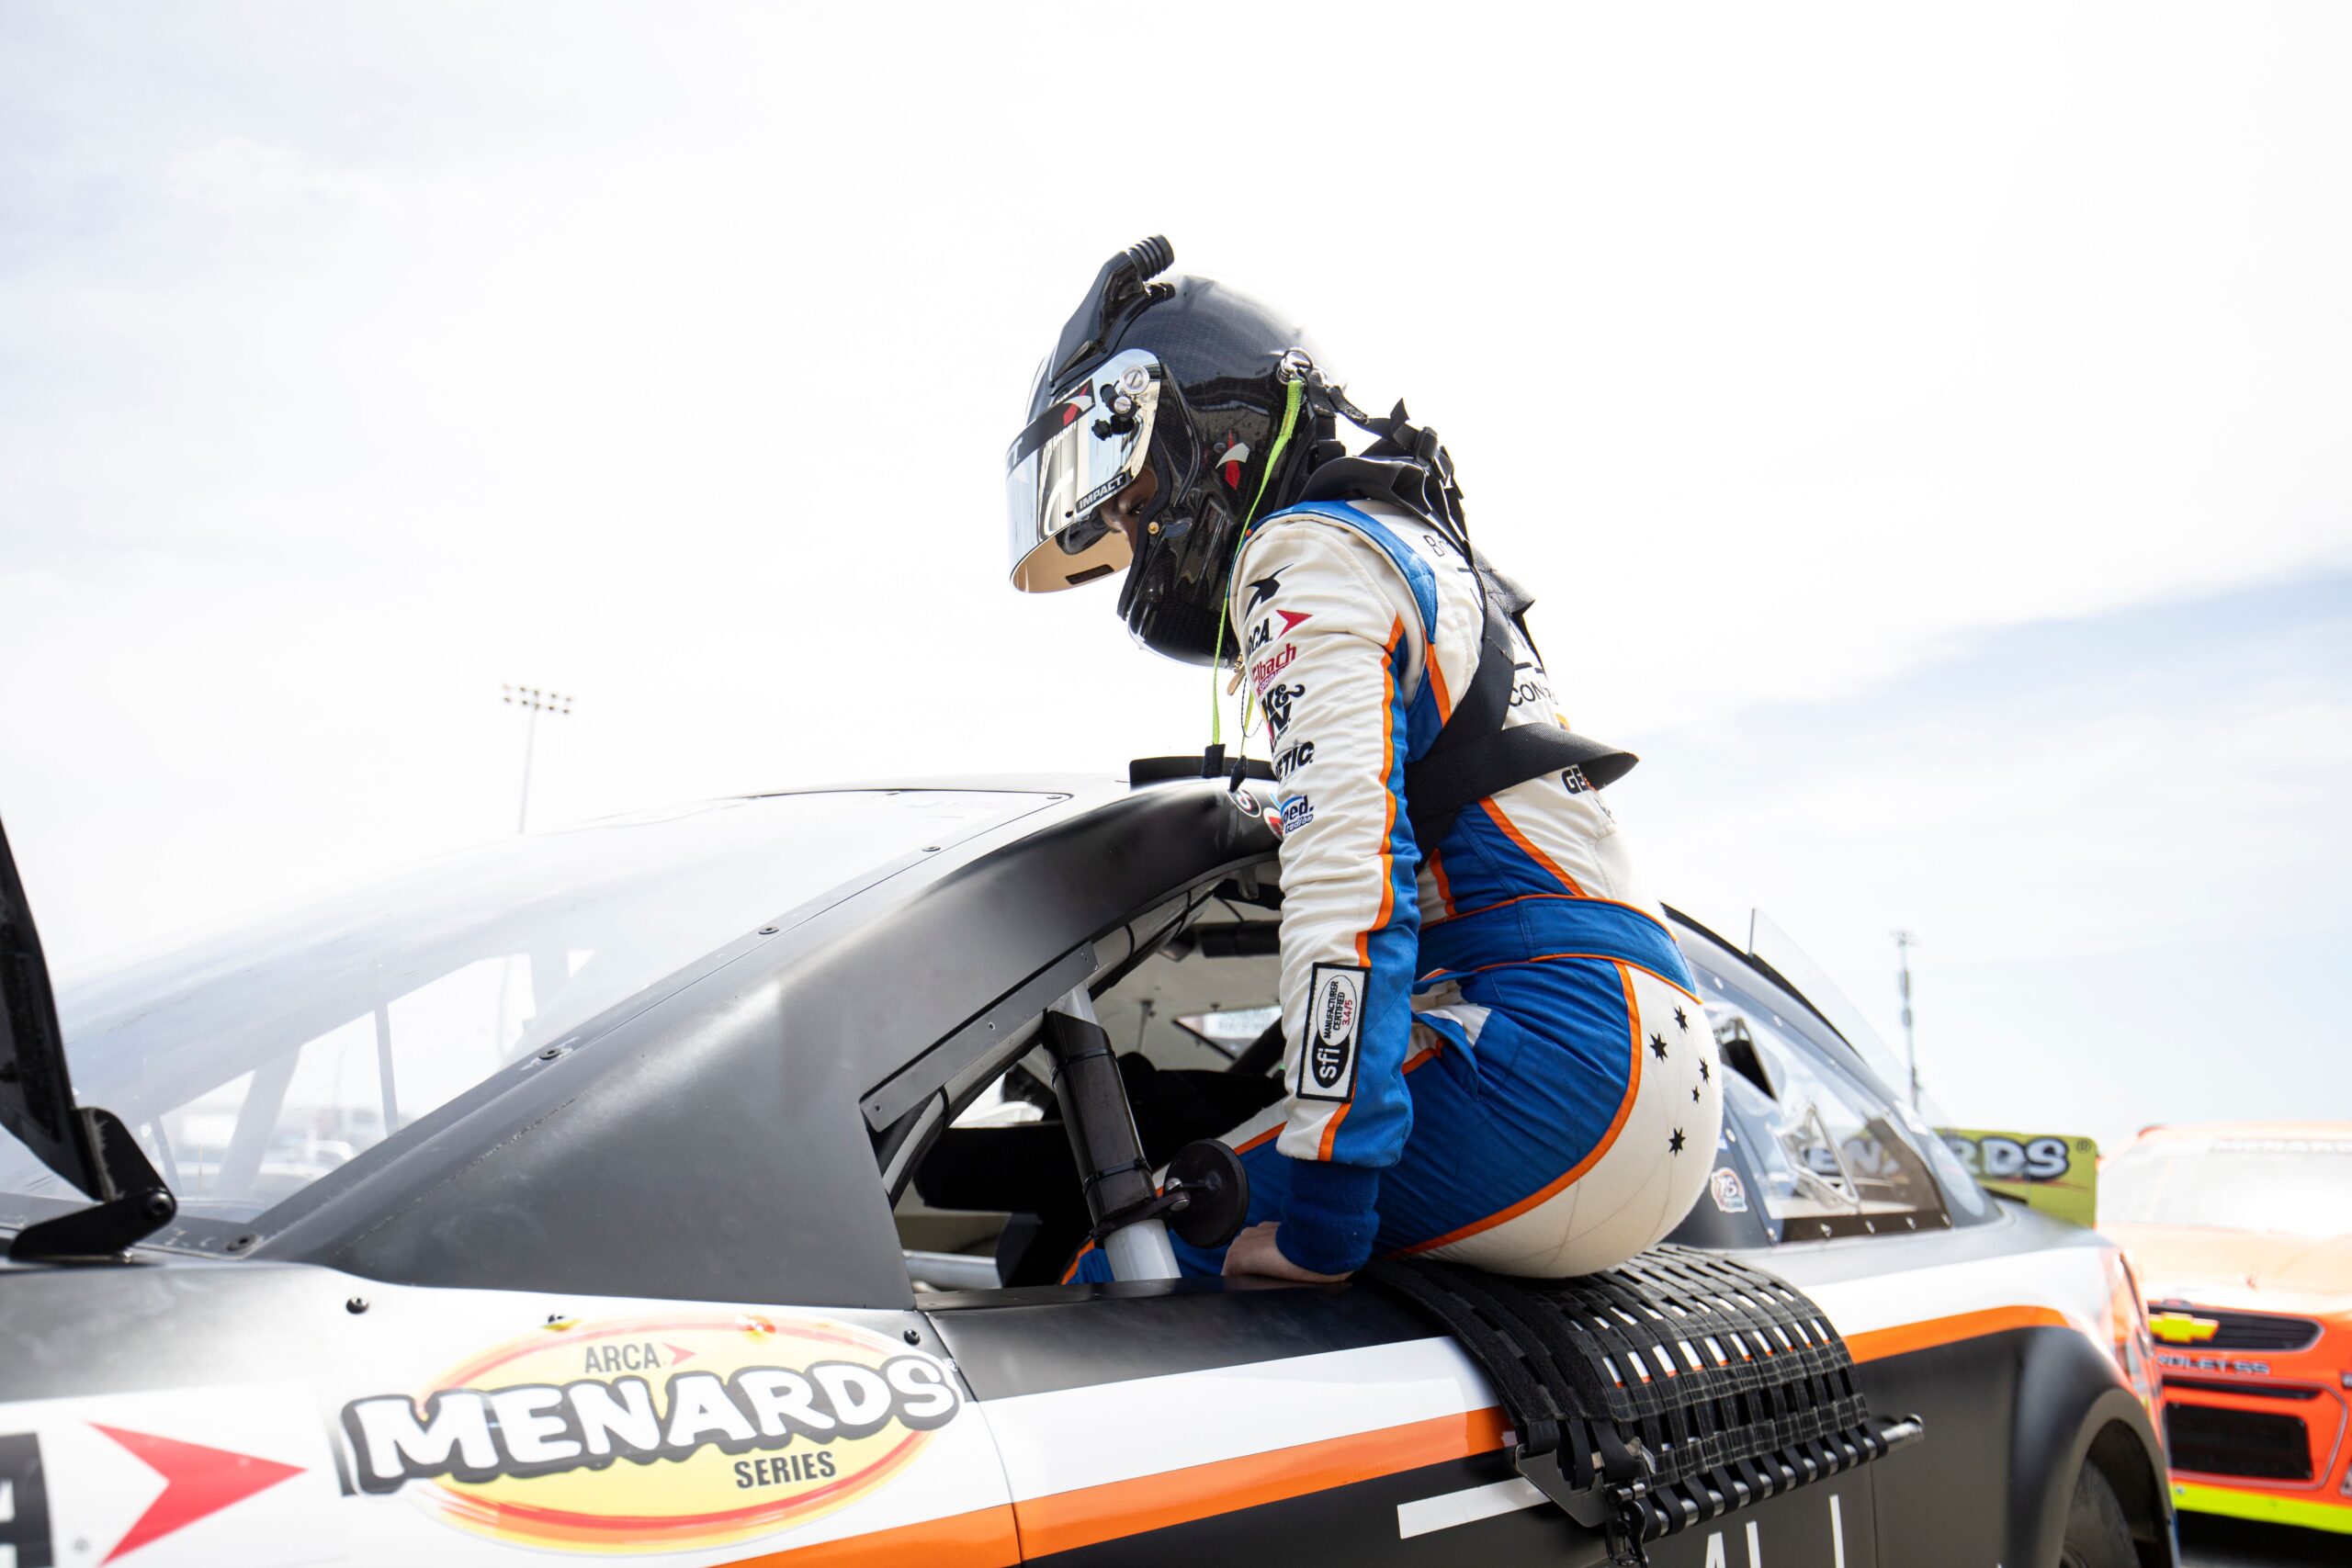 Markedly, Burgess enjoys racing with "Underdog" this season. (Photo: Ethan Smith)